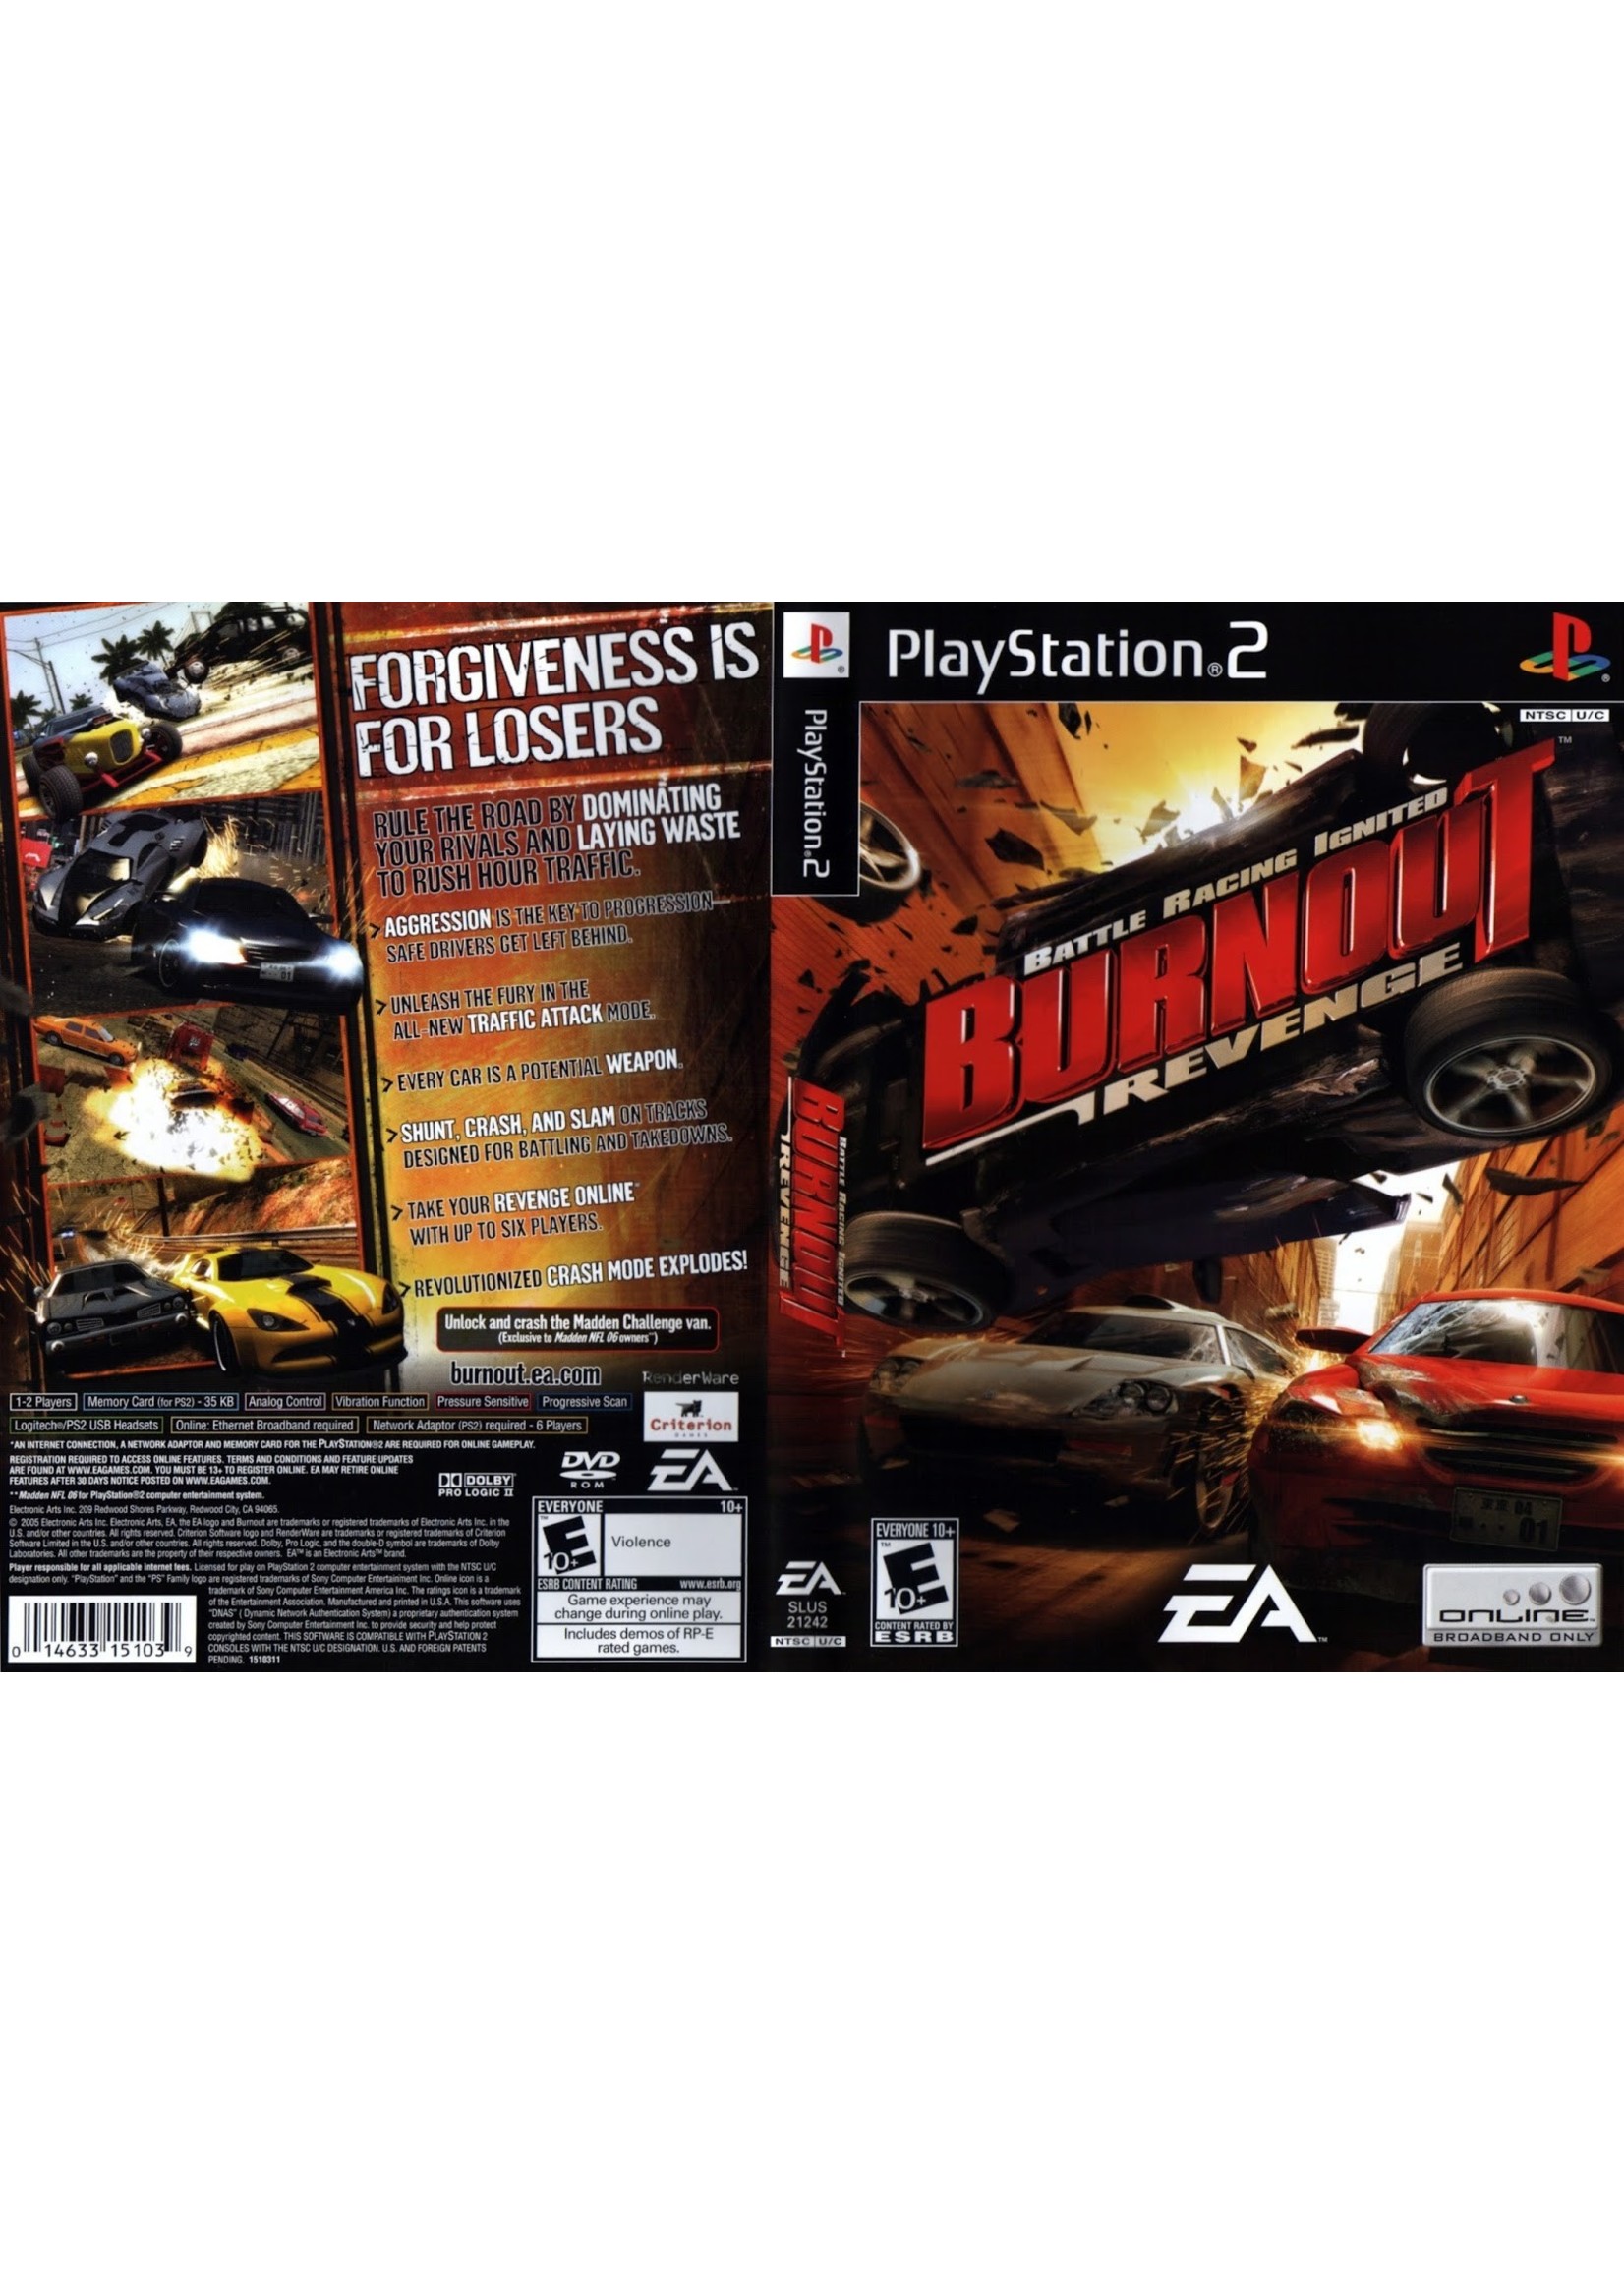 Sony Playstation 2 (PS2) Burnout Revenge